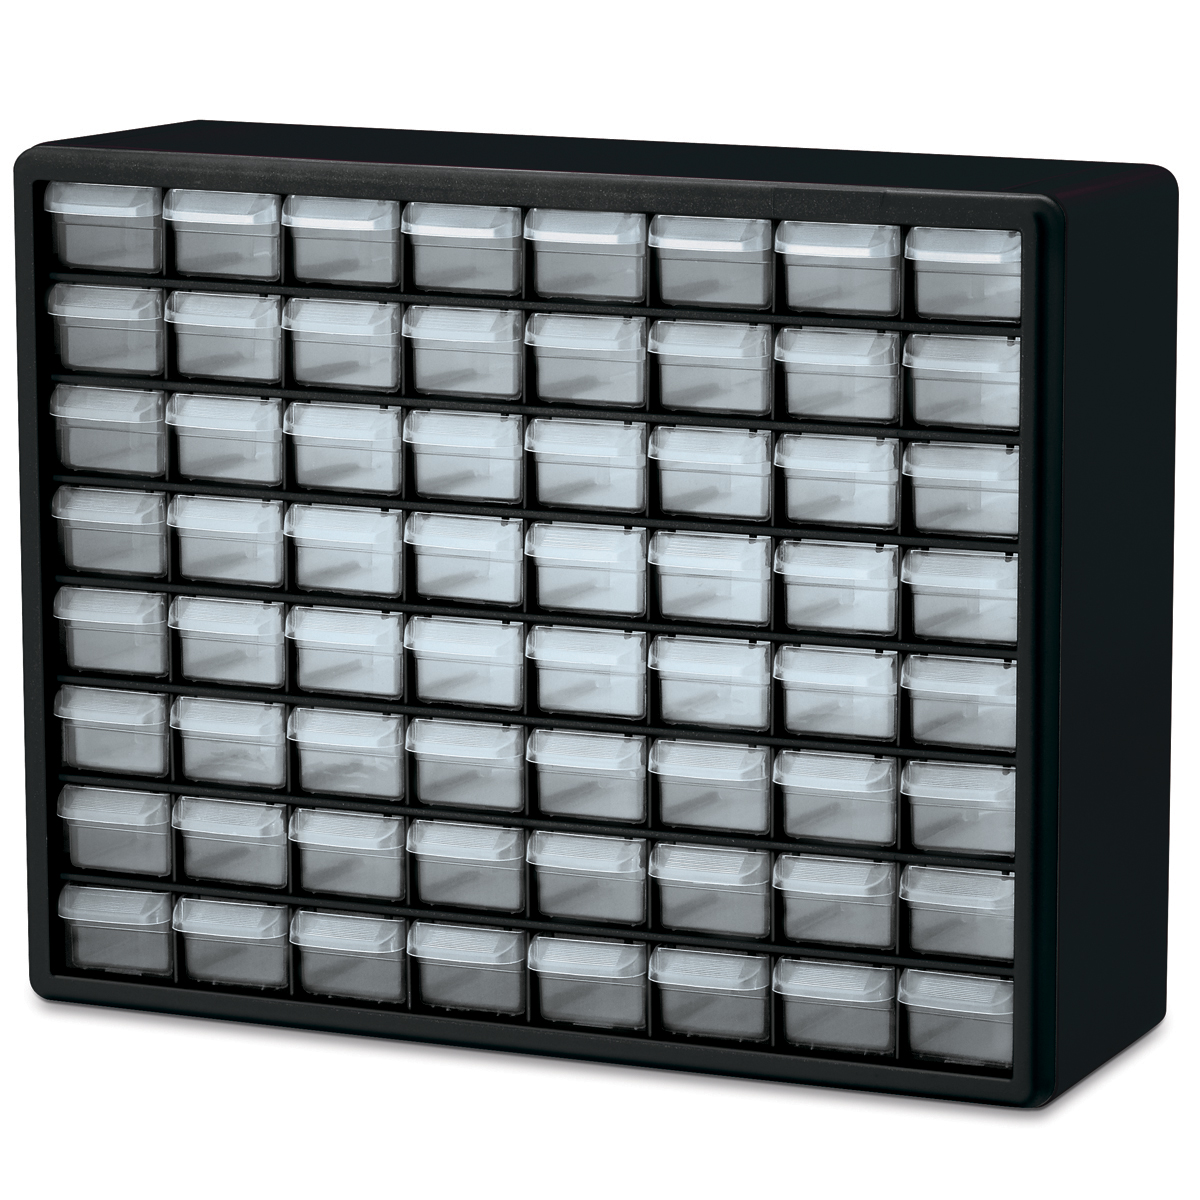 AkroMils 10164 64 Drawer Storage ACS Supply Advance